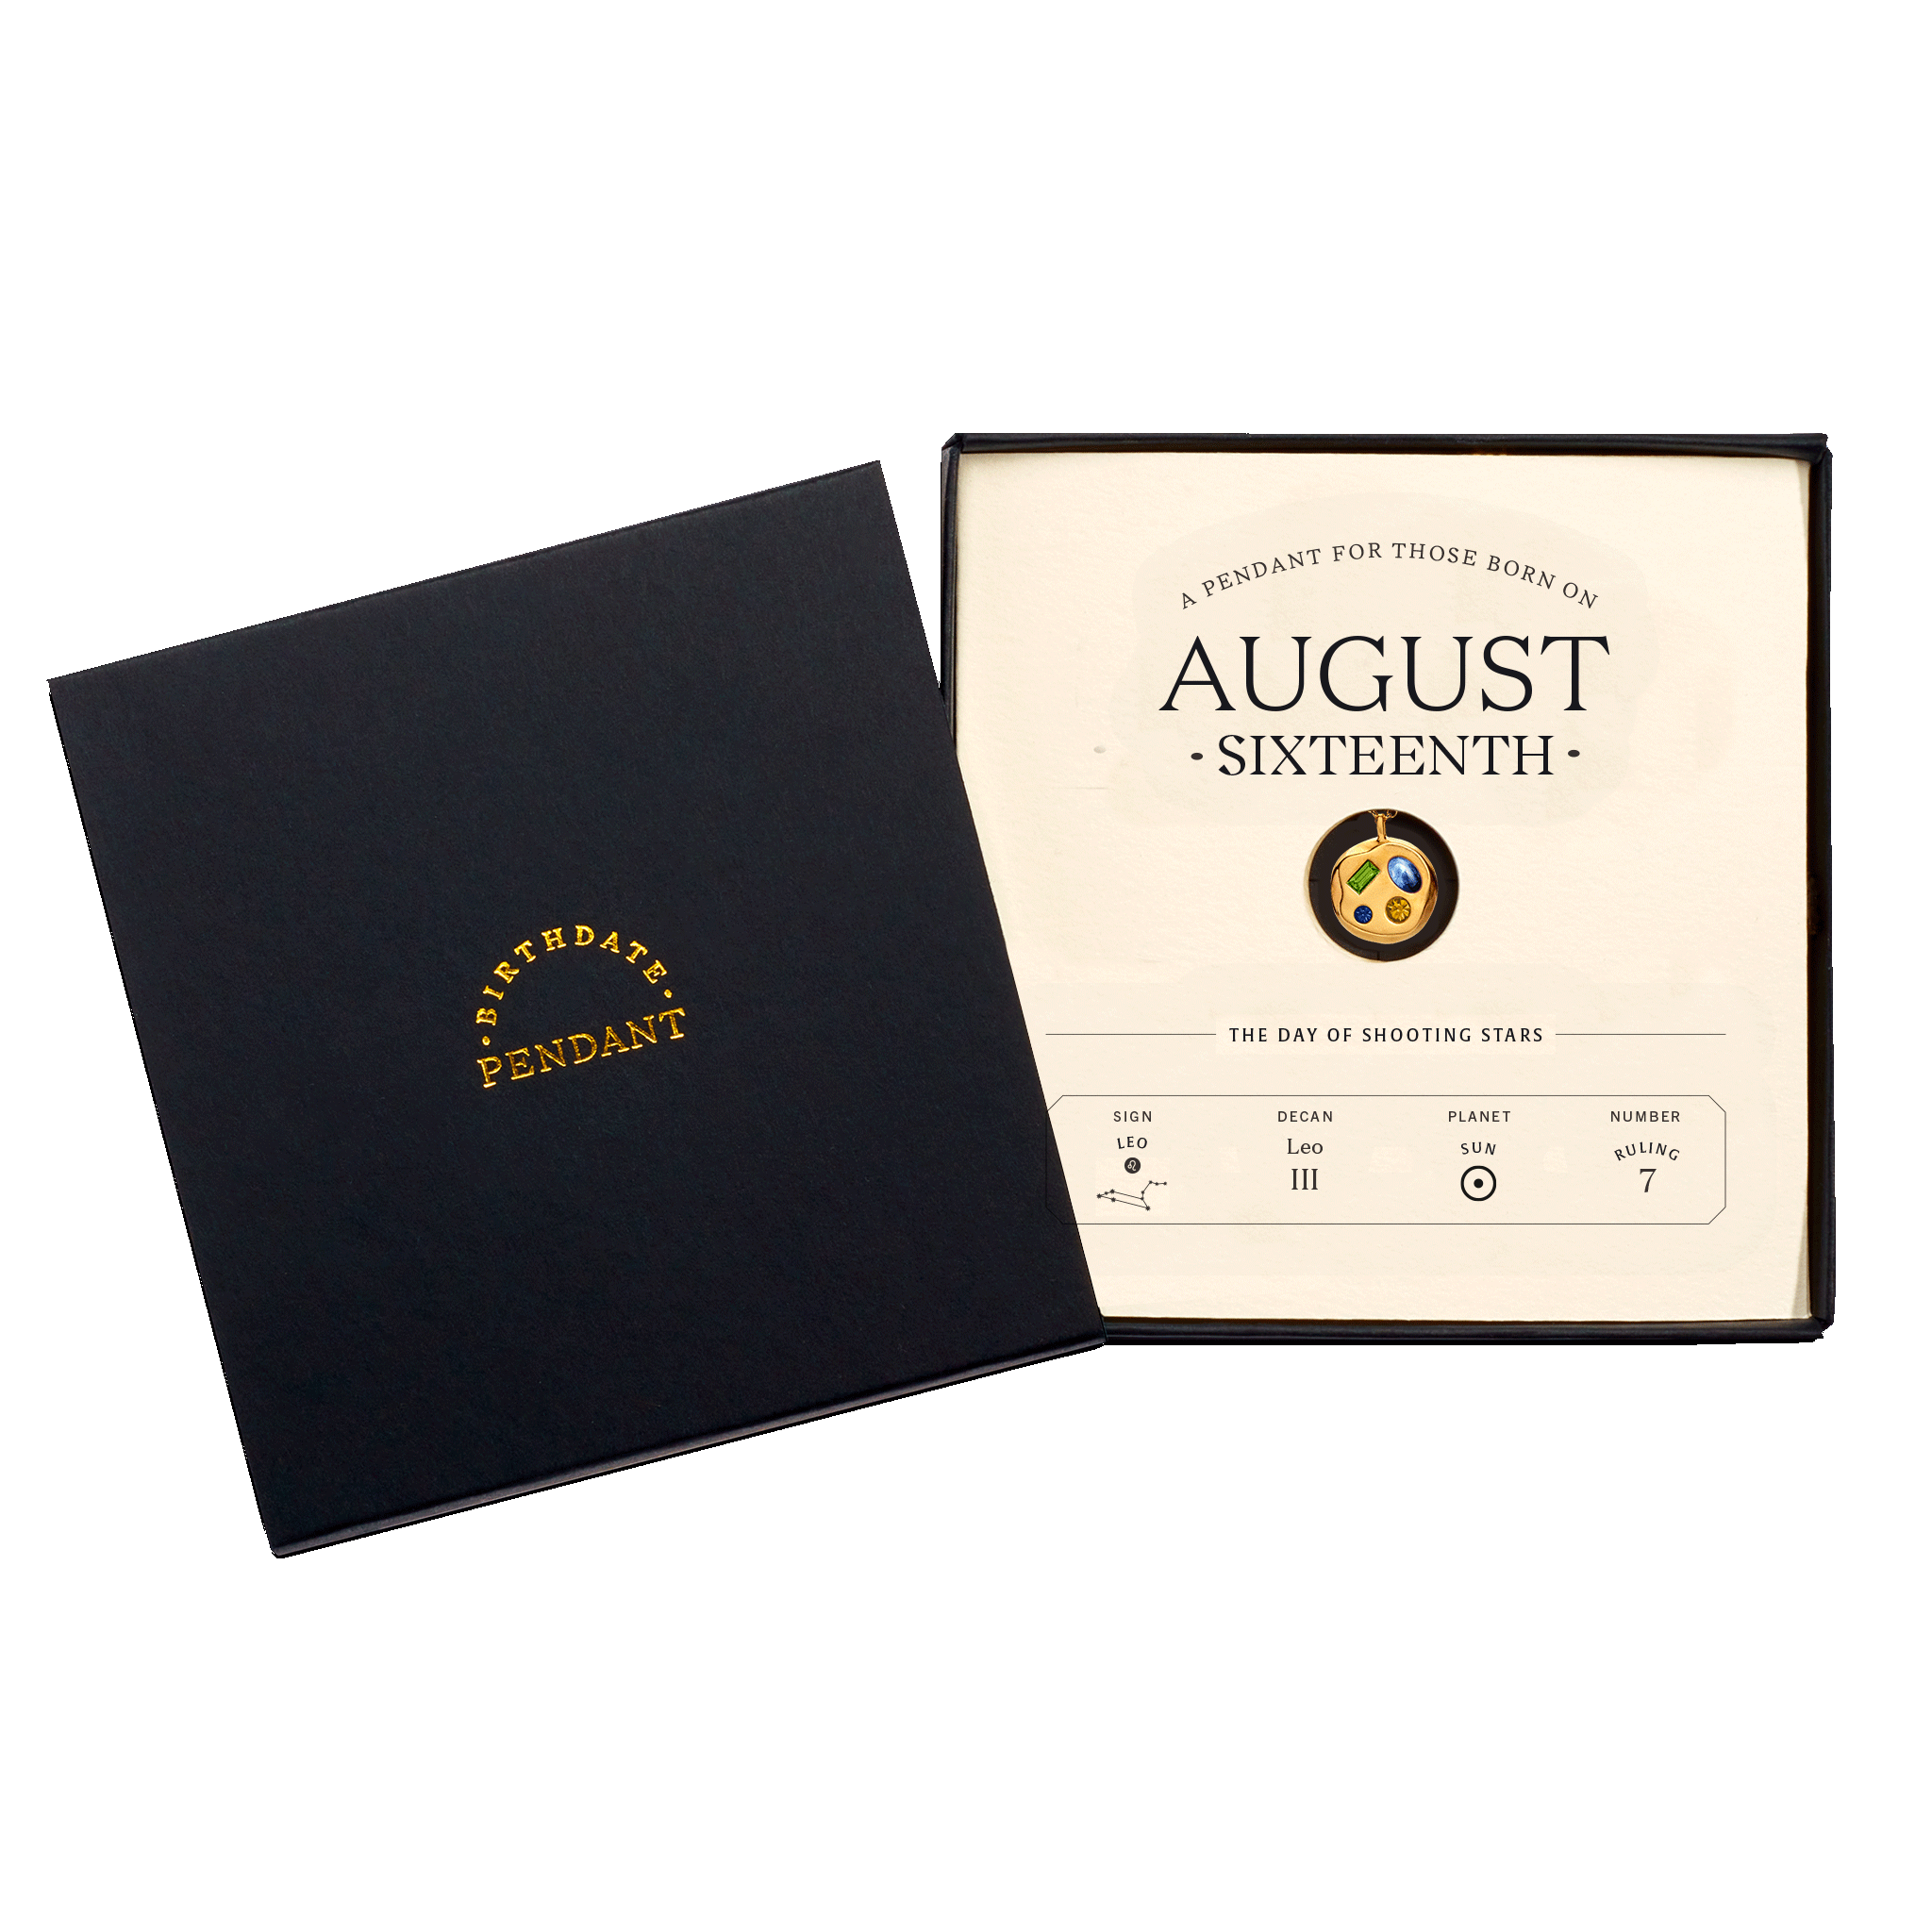 The August Sixteenth Pendant inside its box